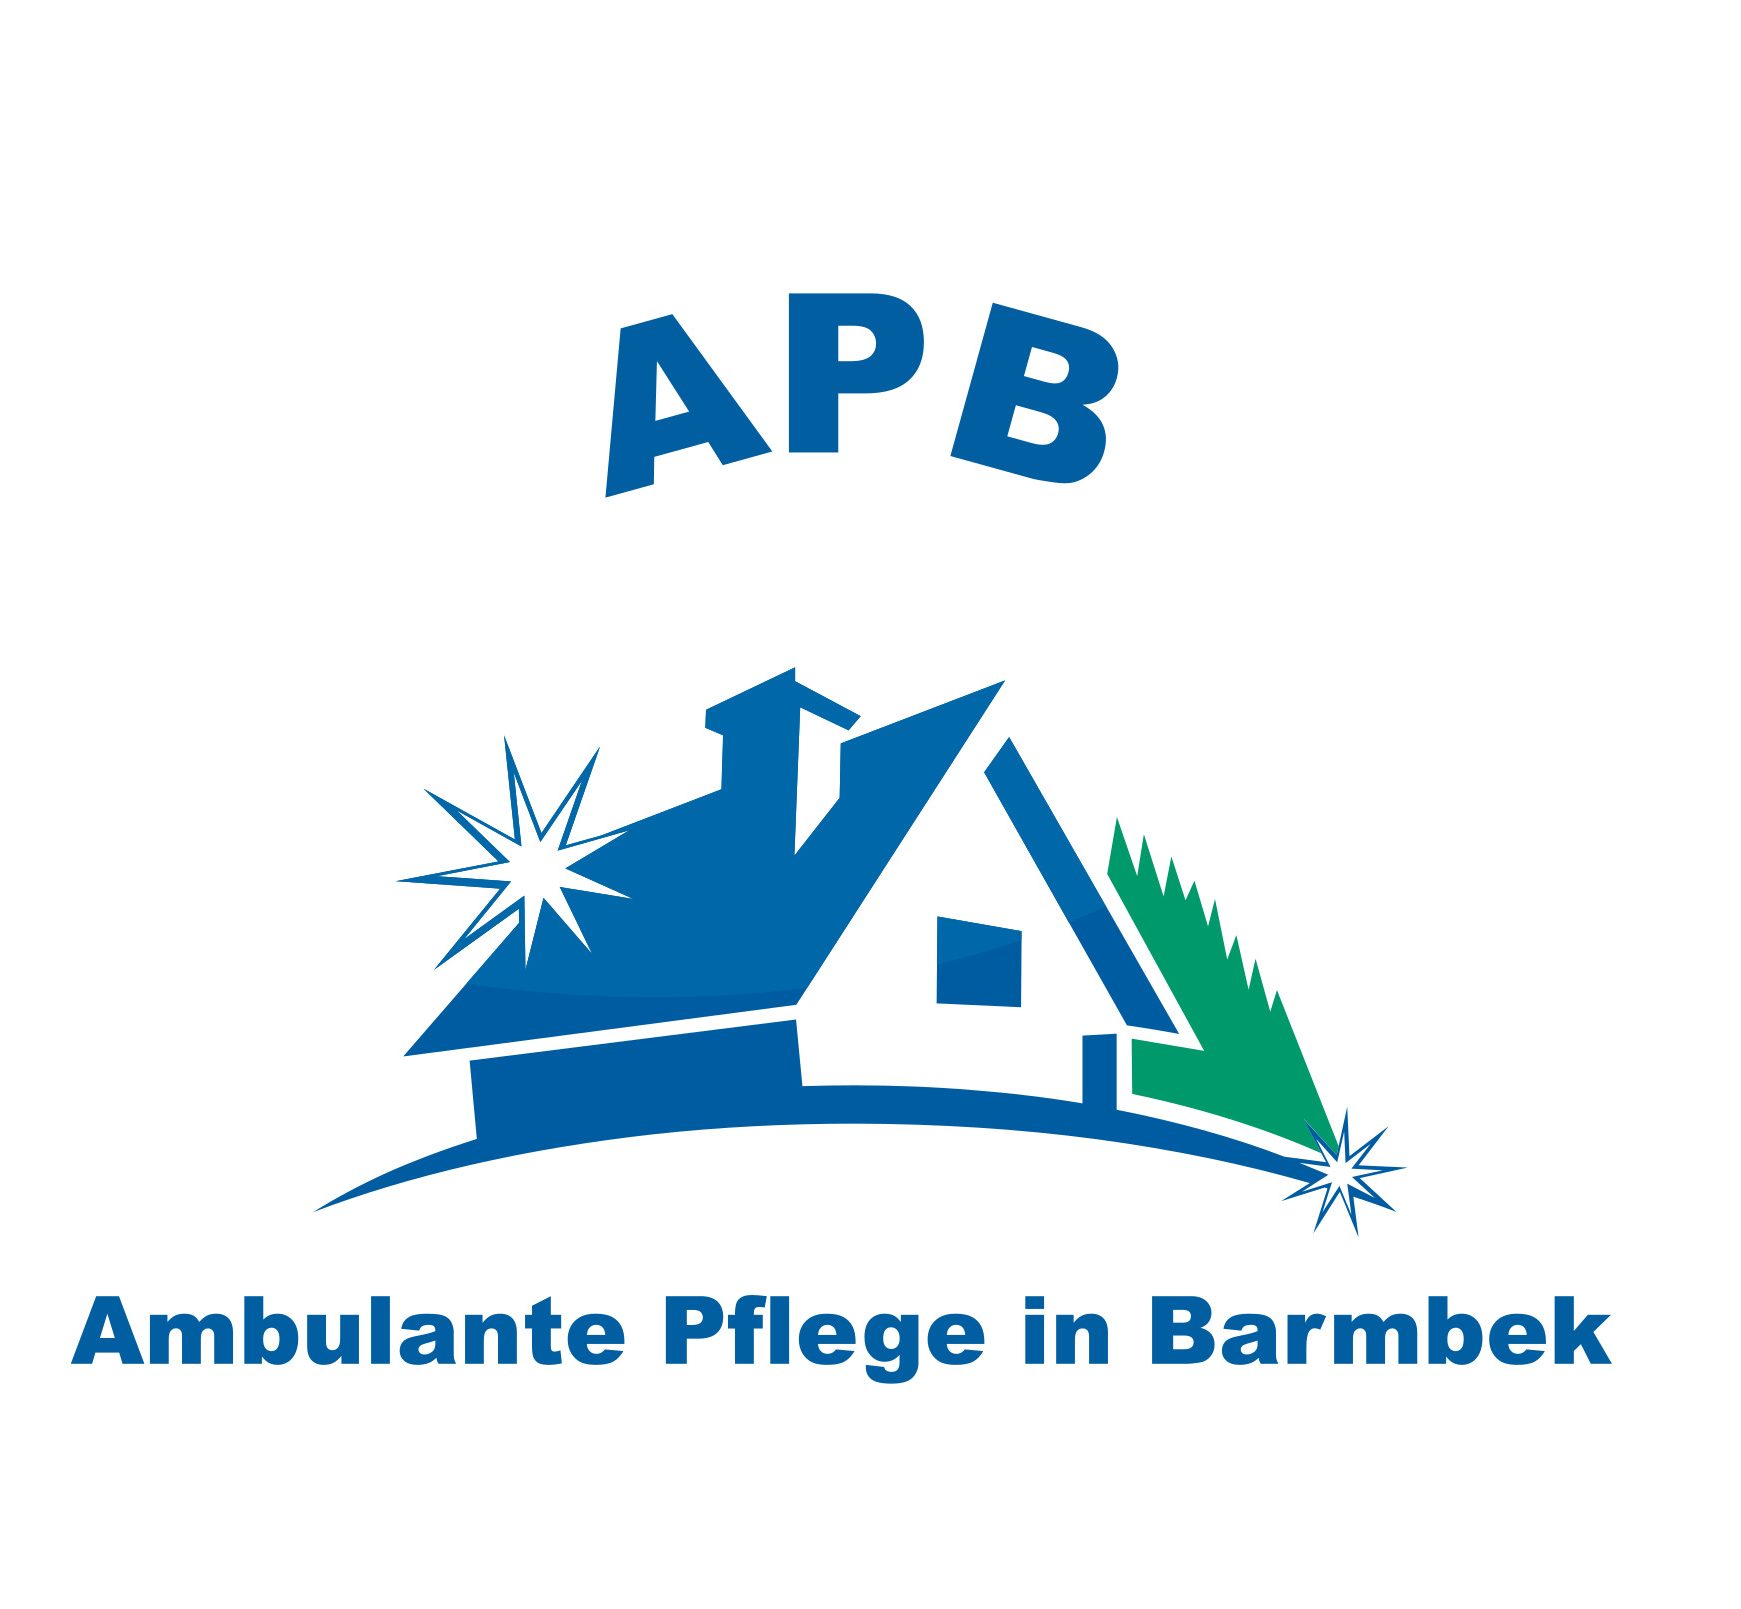 Ambulante Pflege in Barmbek GmbH